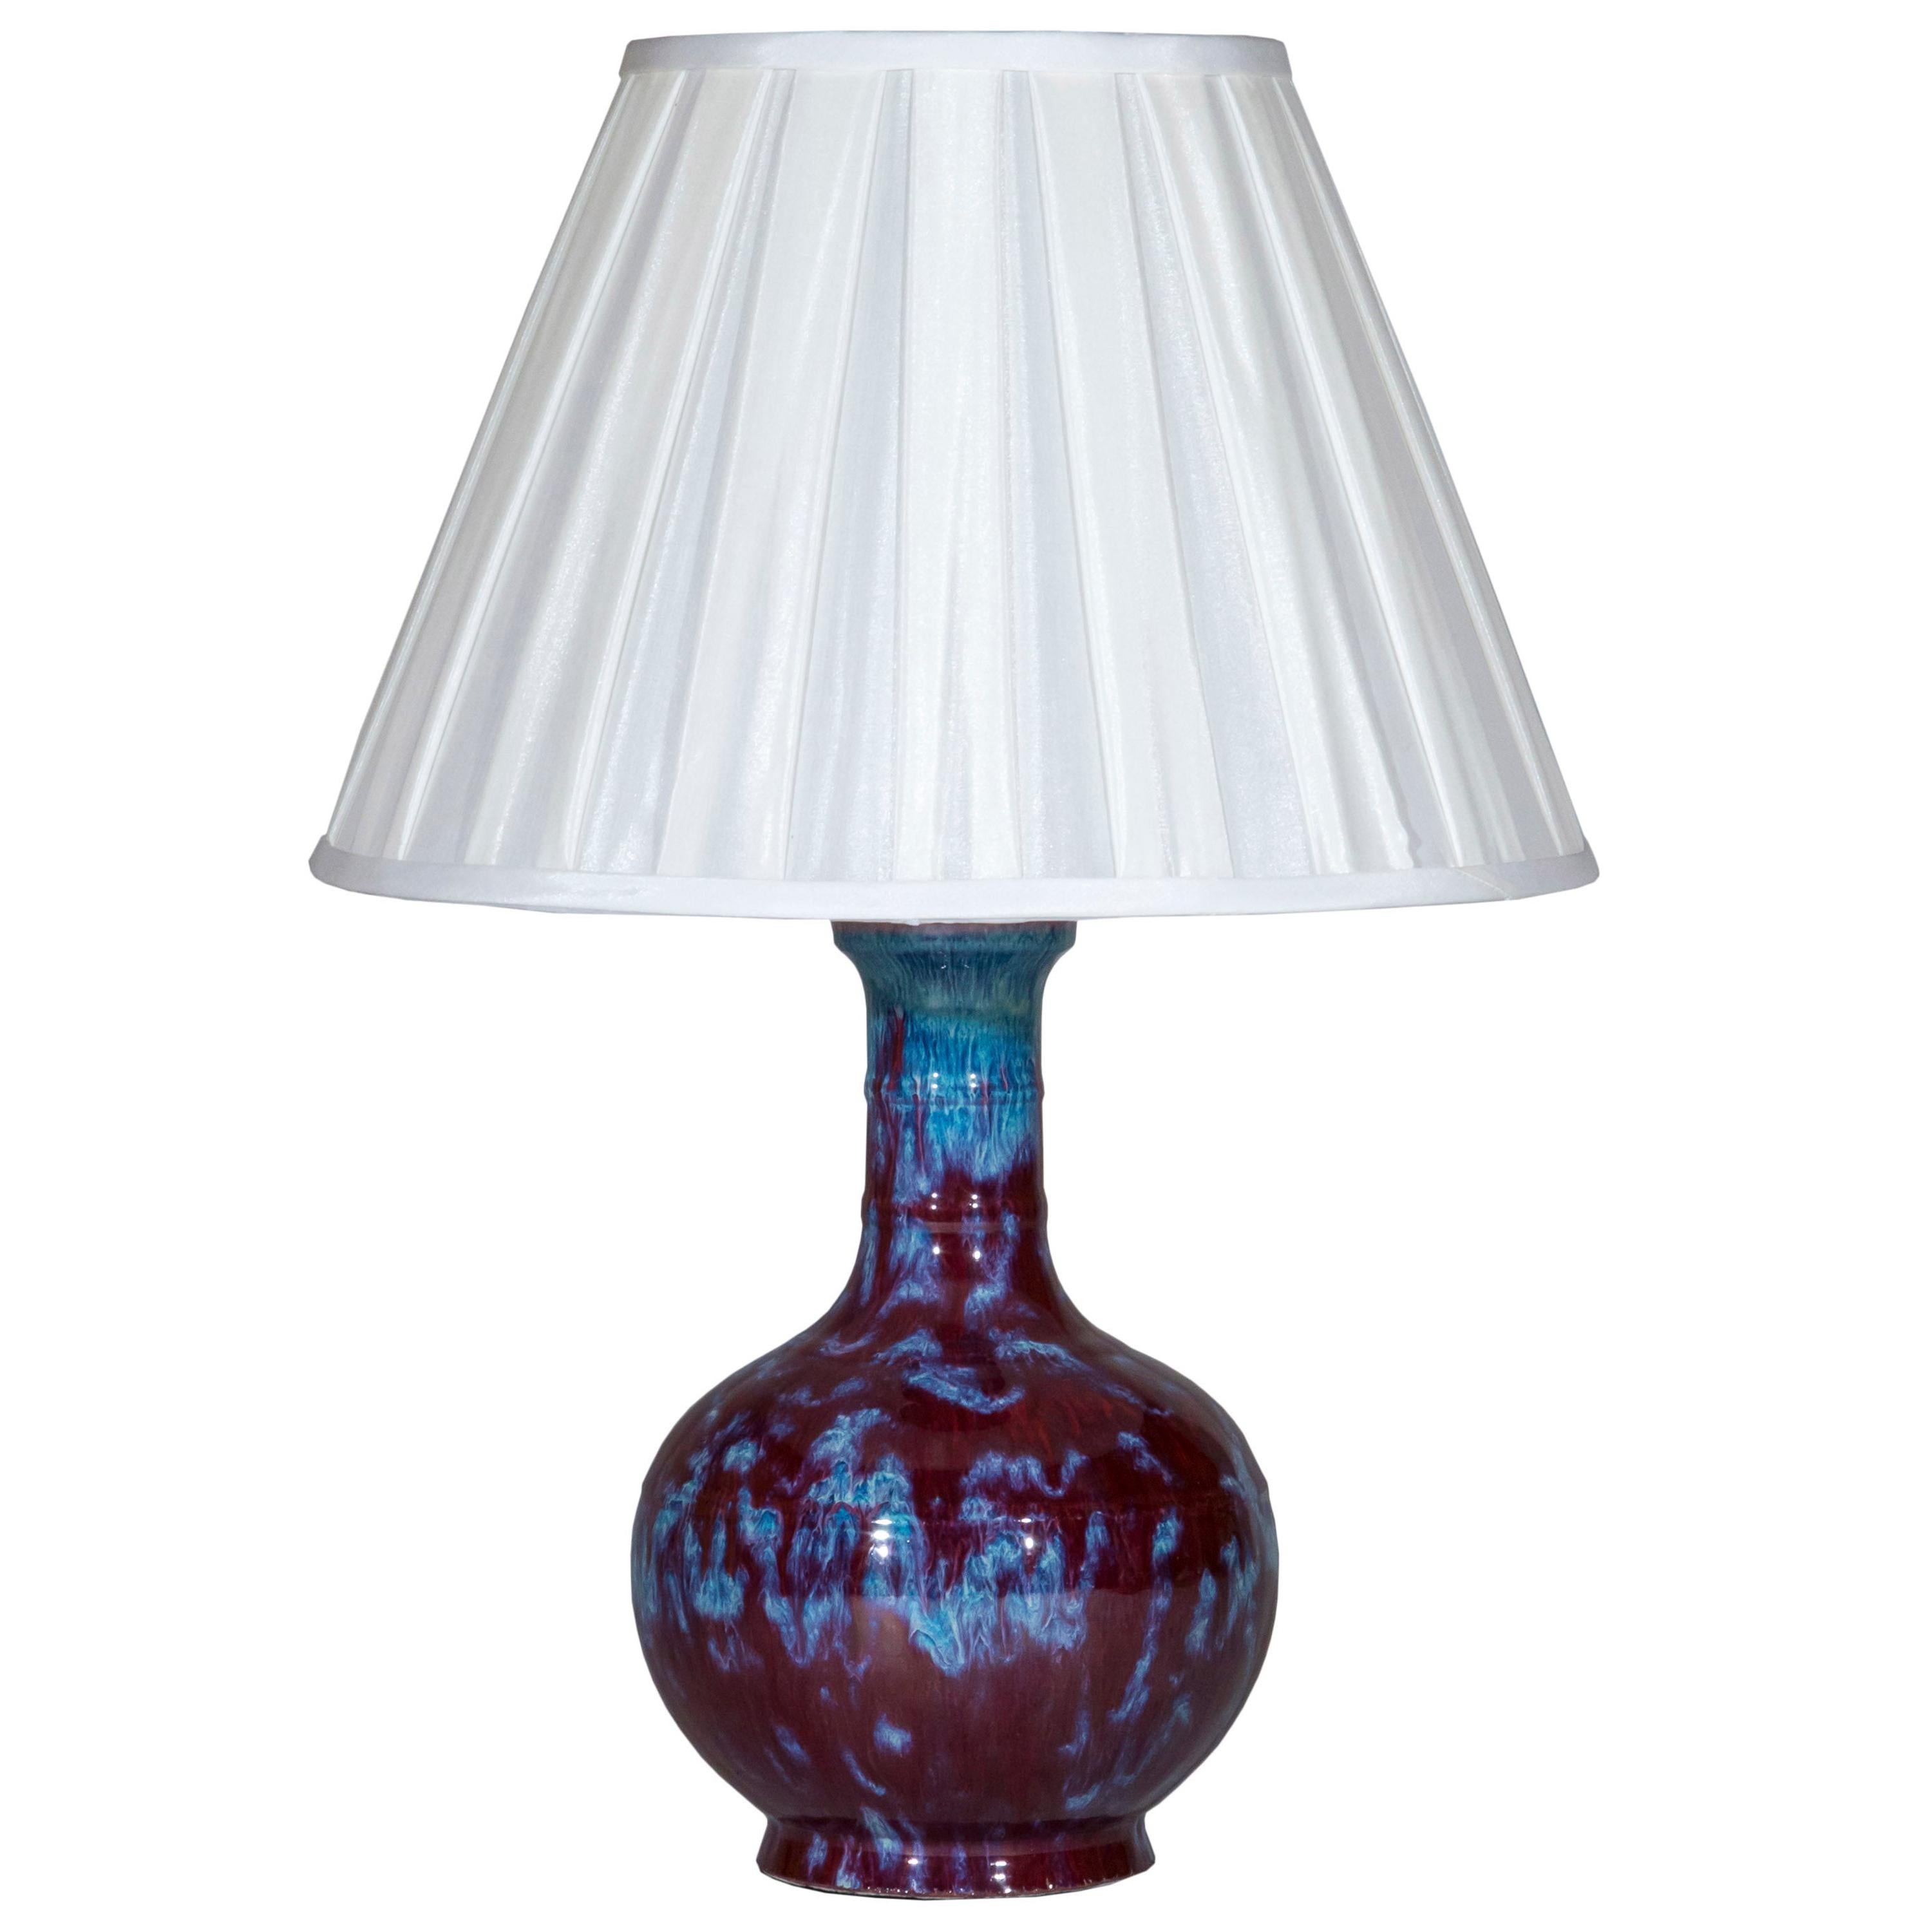 Antique Chinese Flambé Vase Lamp Burgundy and Blue